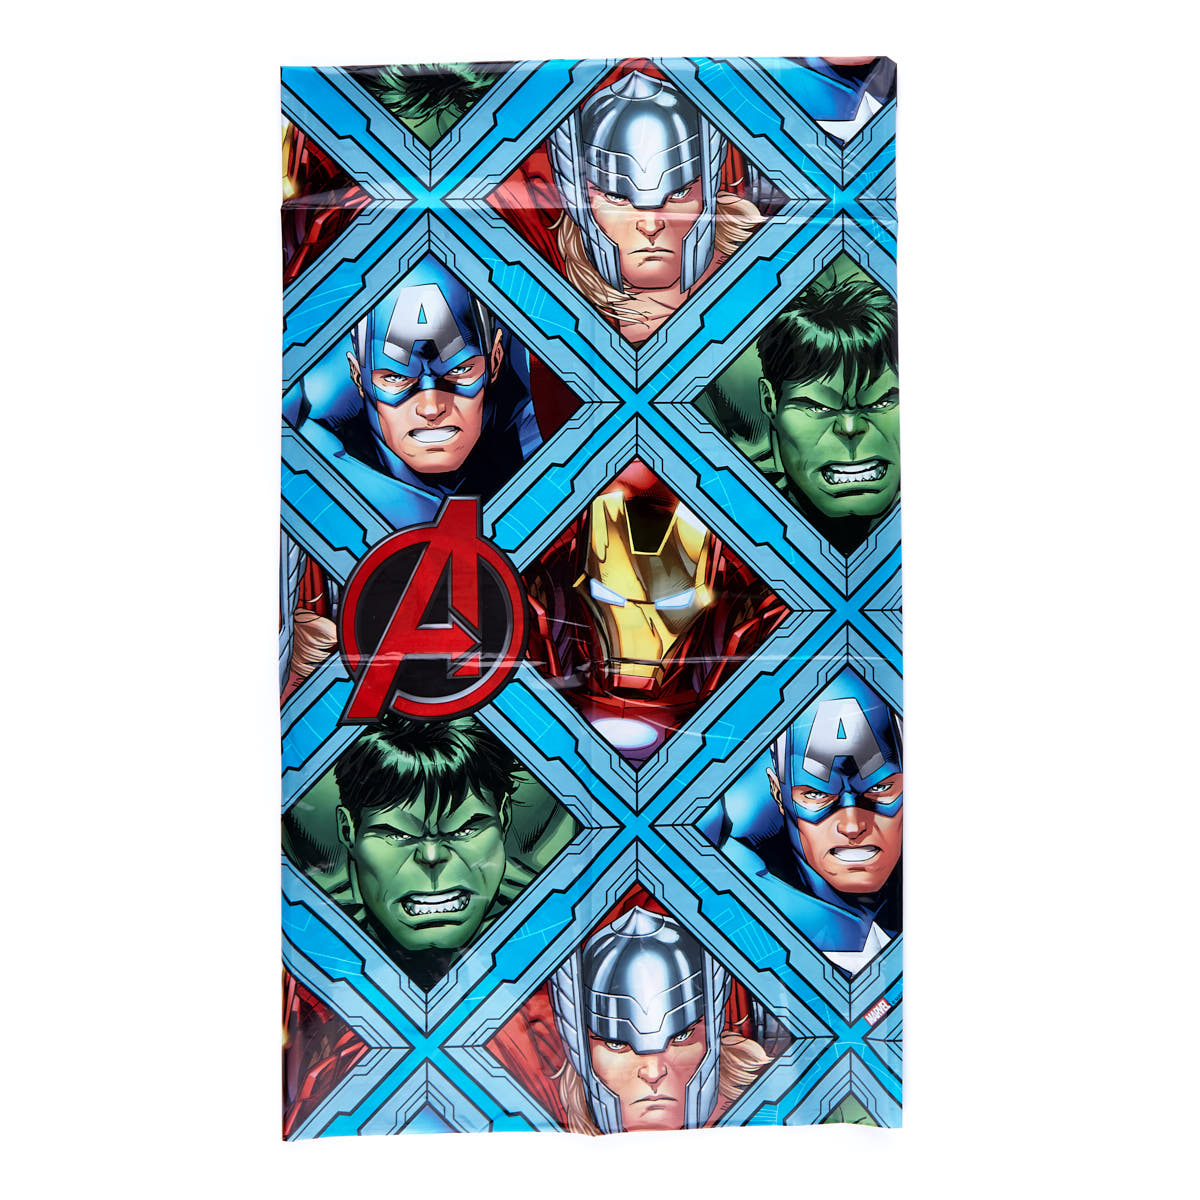 Marvel Avengers Party Tableware Bundle - 16 Guests